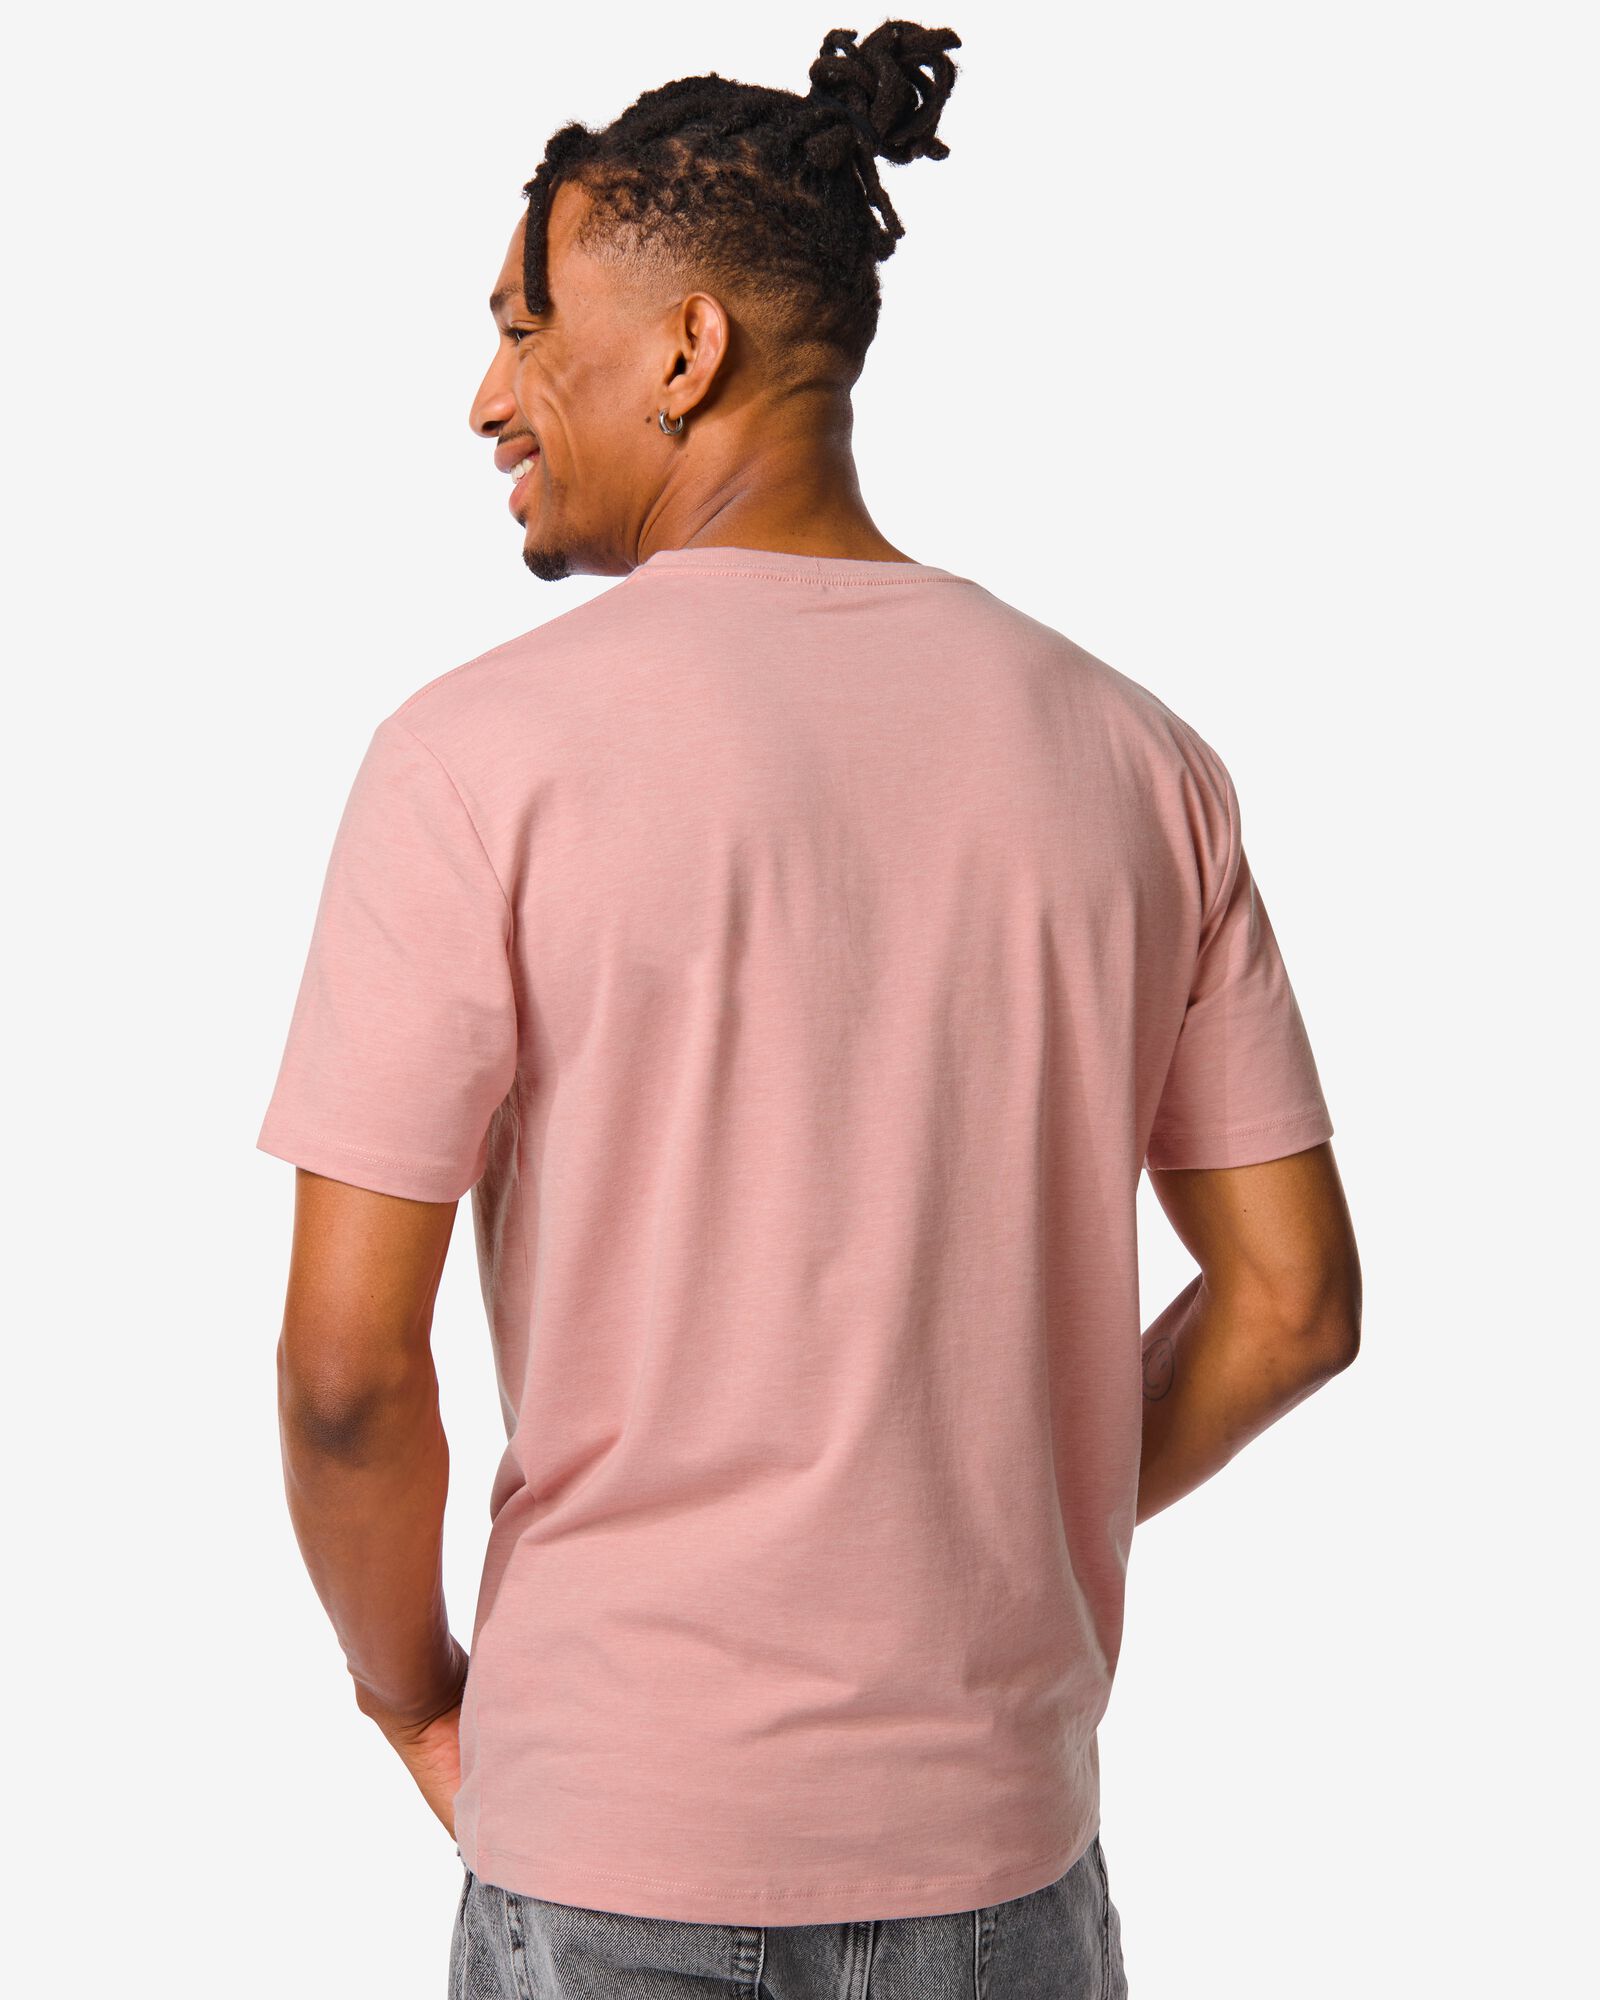 heren t-shirt roze roze - 1000031867 - HEMA